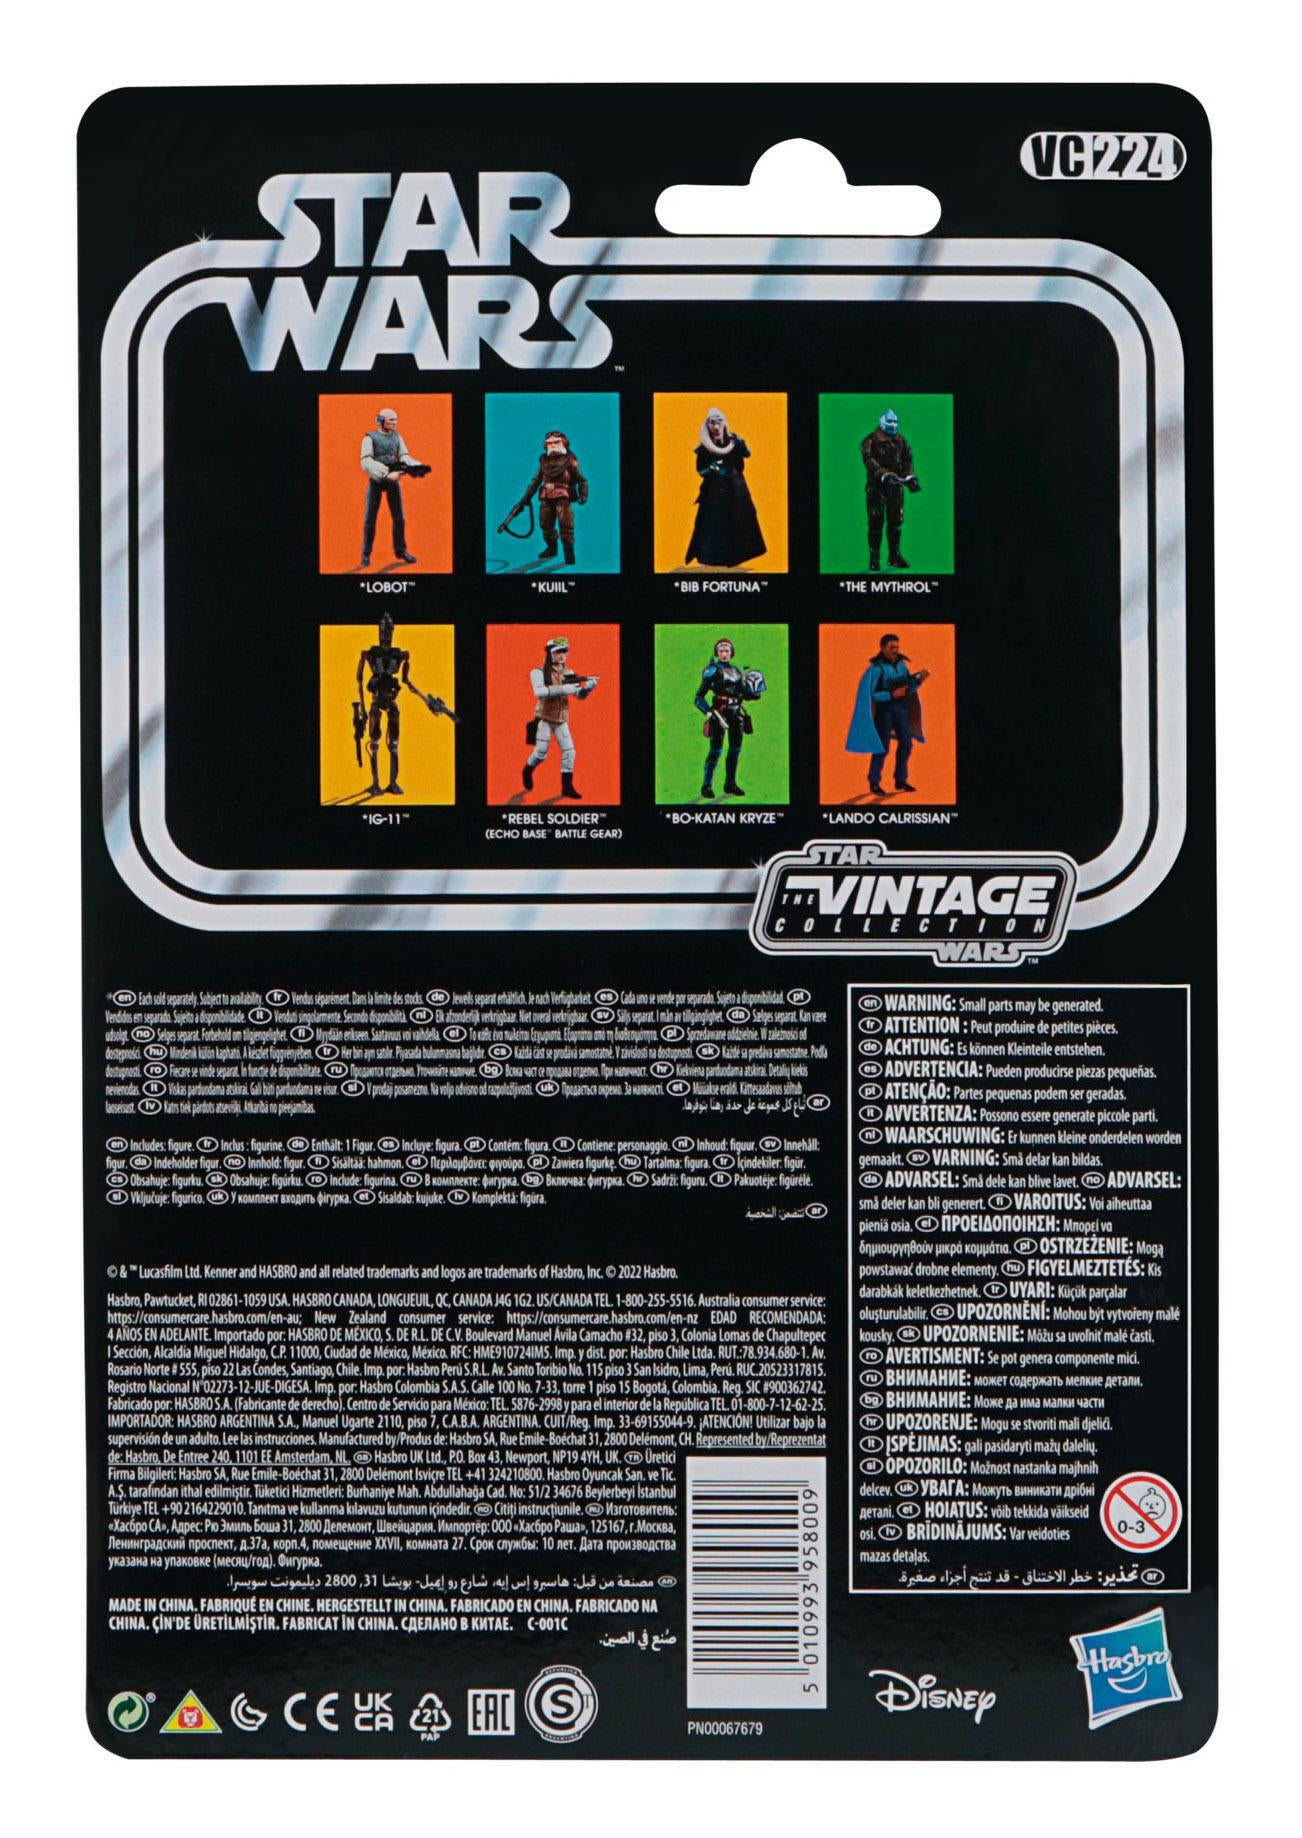 Star Wars Vintage Collection Episode VI Bib Fortuna 10cm *B-Ware* Hasbro